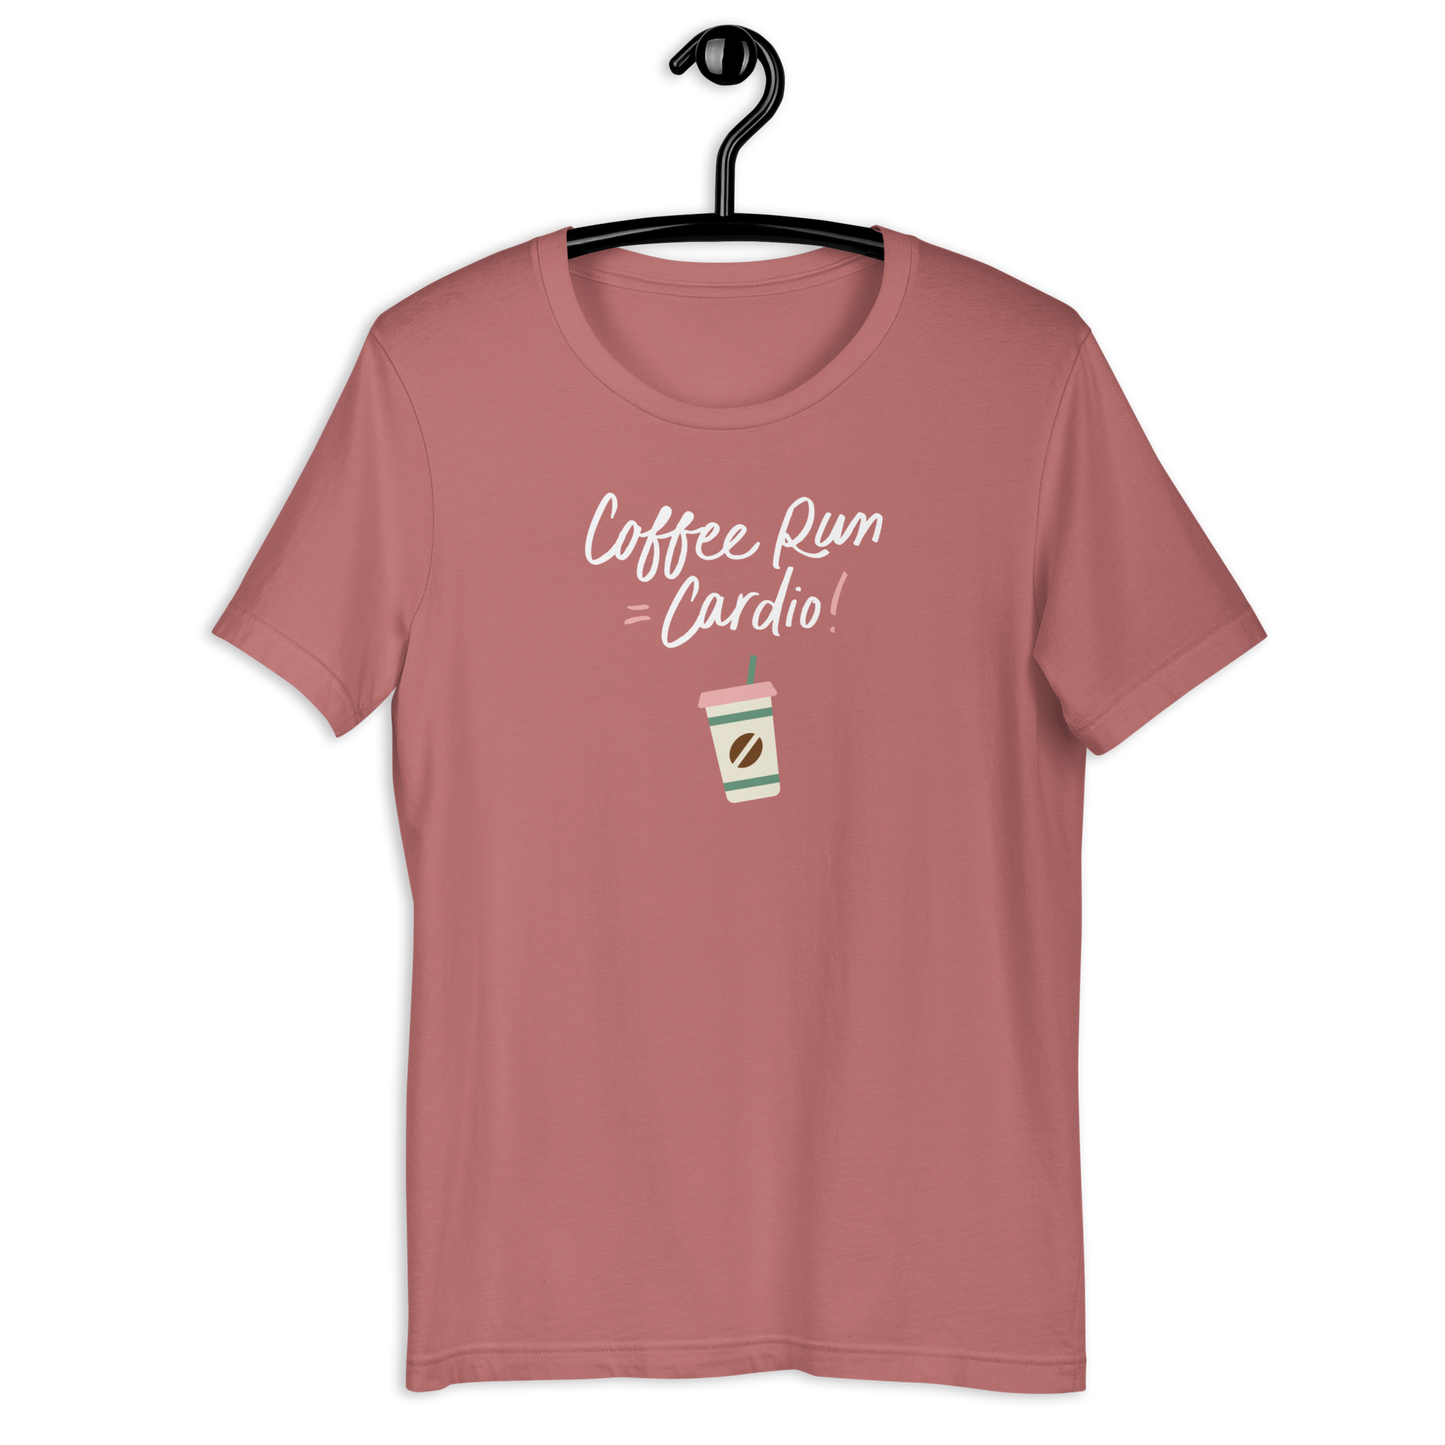 Coffee Run is my Cardio Shirt